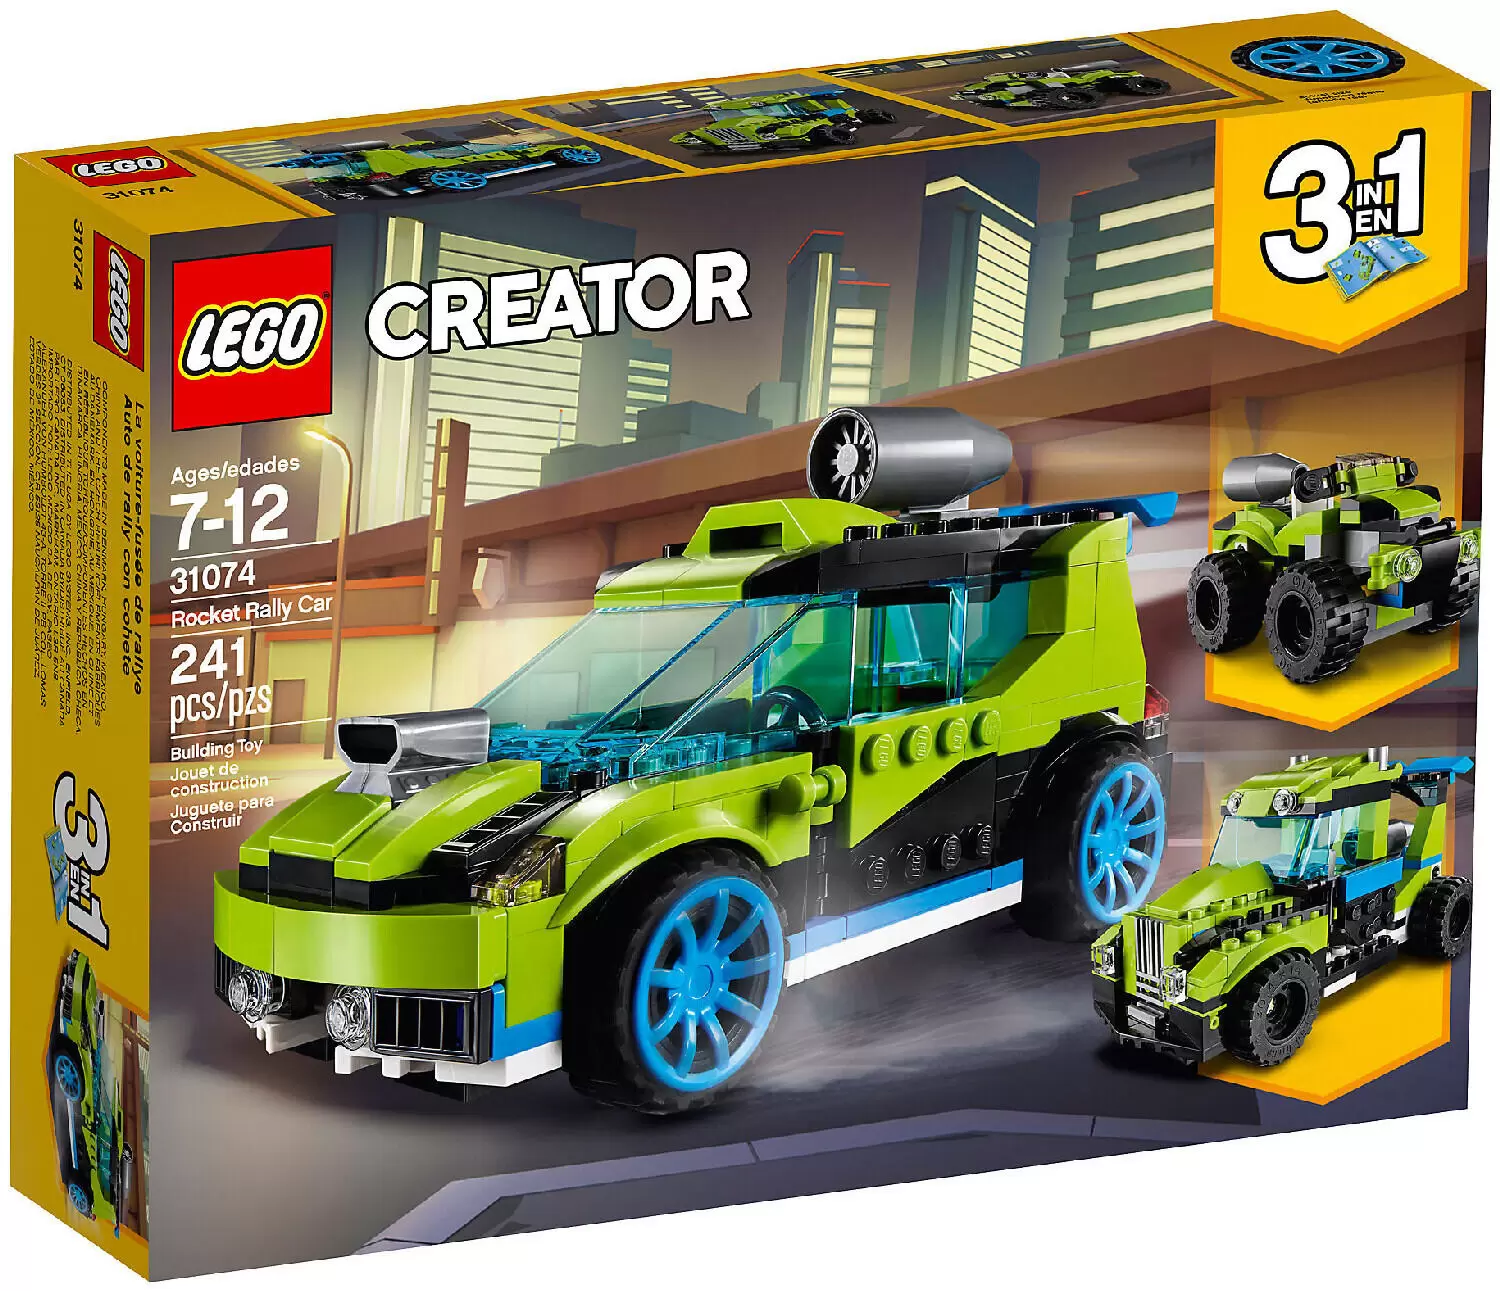 LEGO Creator - Rocket Rallye Car